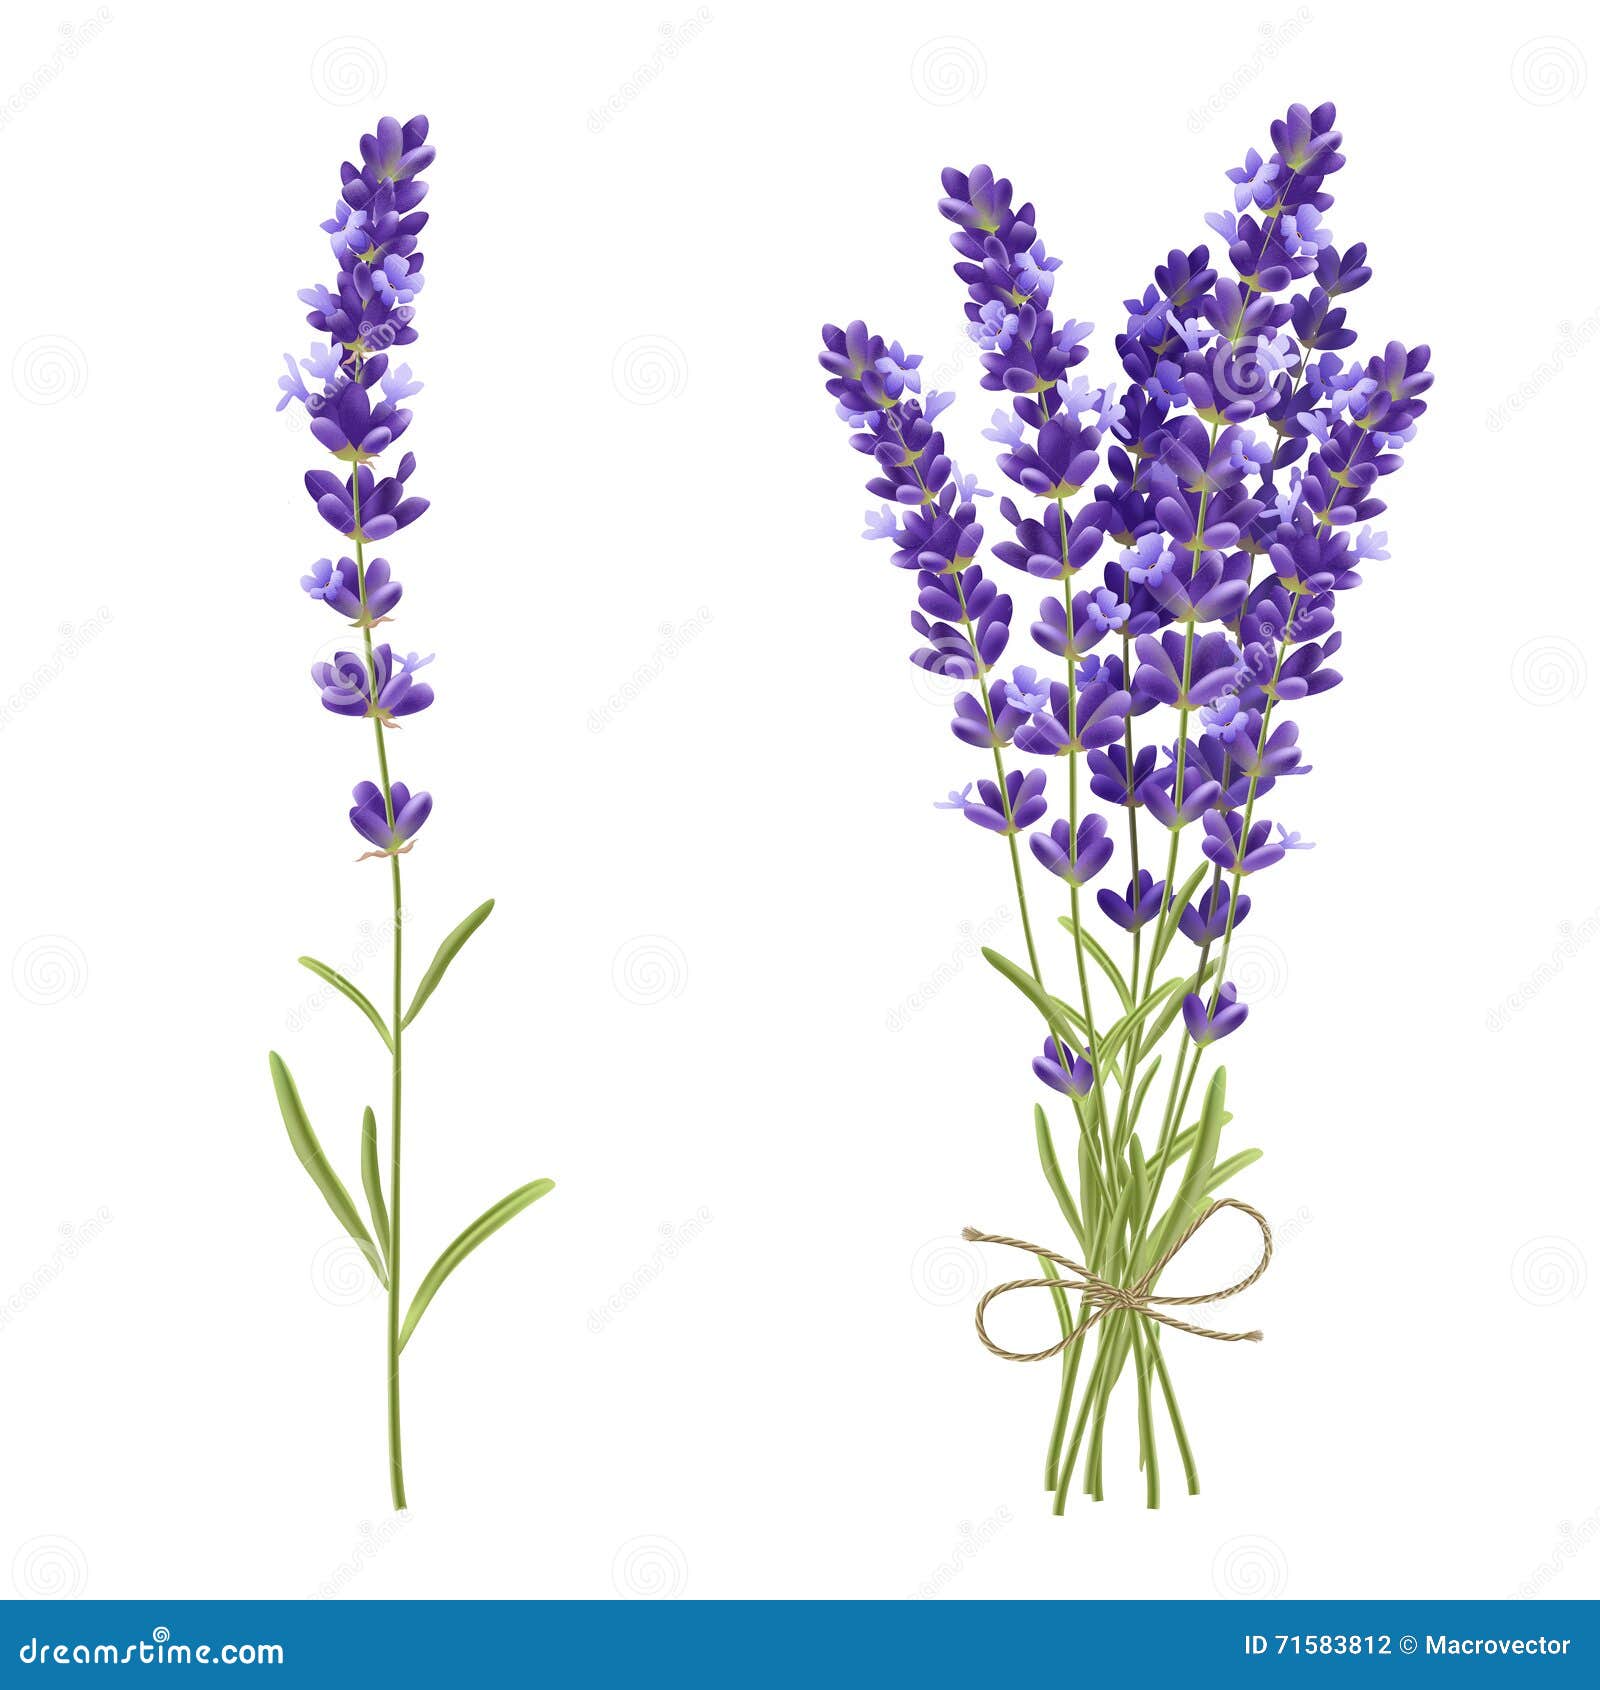 lavender cut flowers realistic image